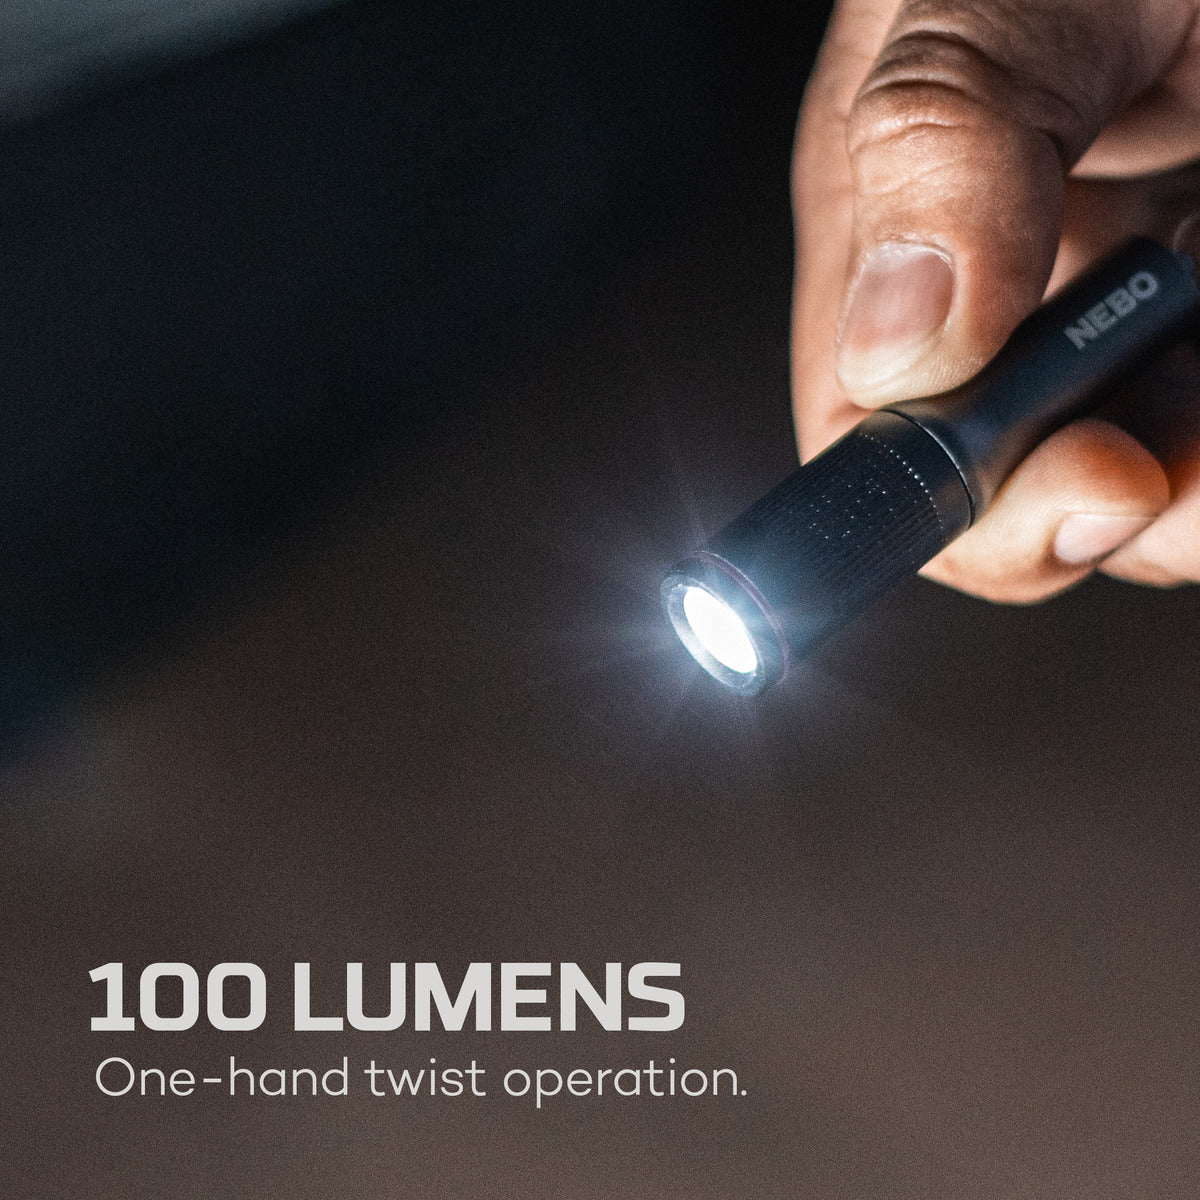 Nebo Columbo Keychain 100 Lumen Flashlight - KBM Outdoors